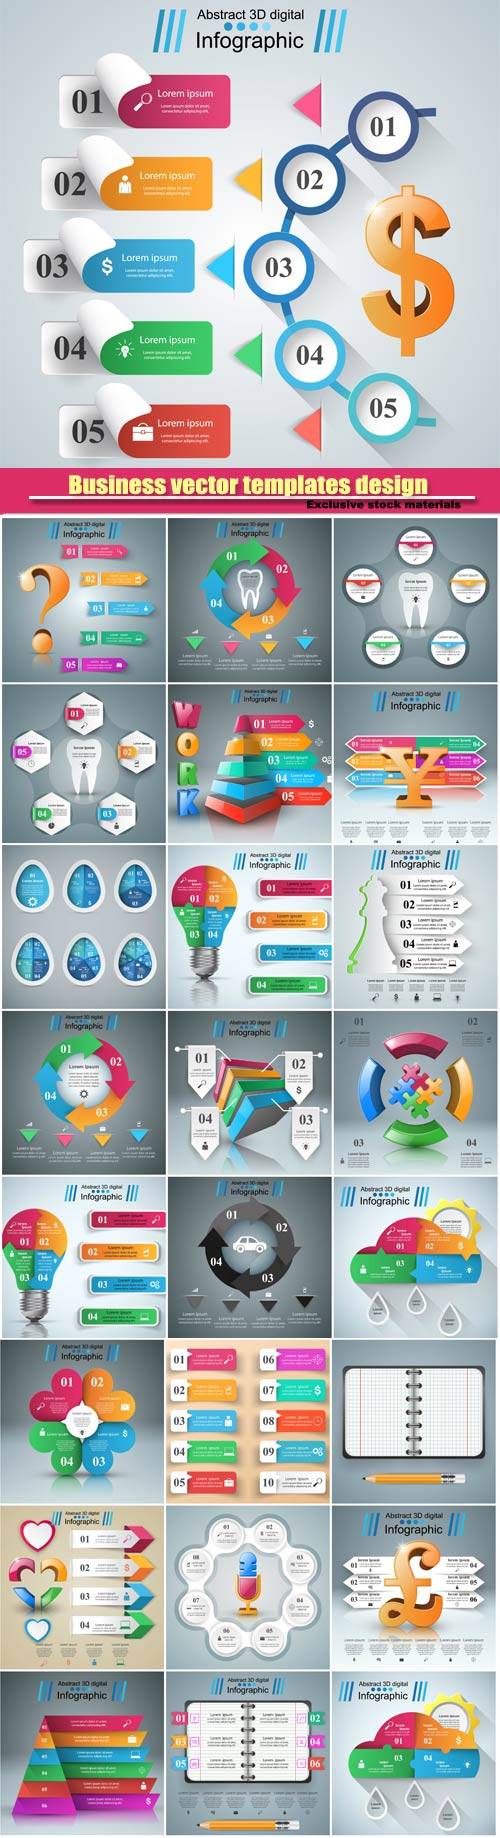 3D business infographic vector design